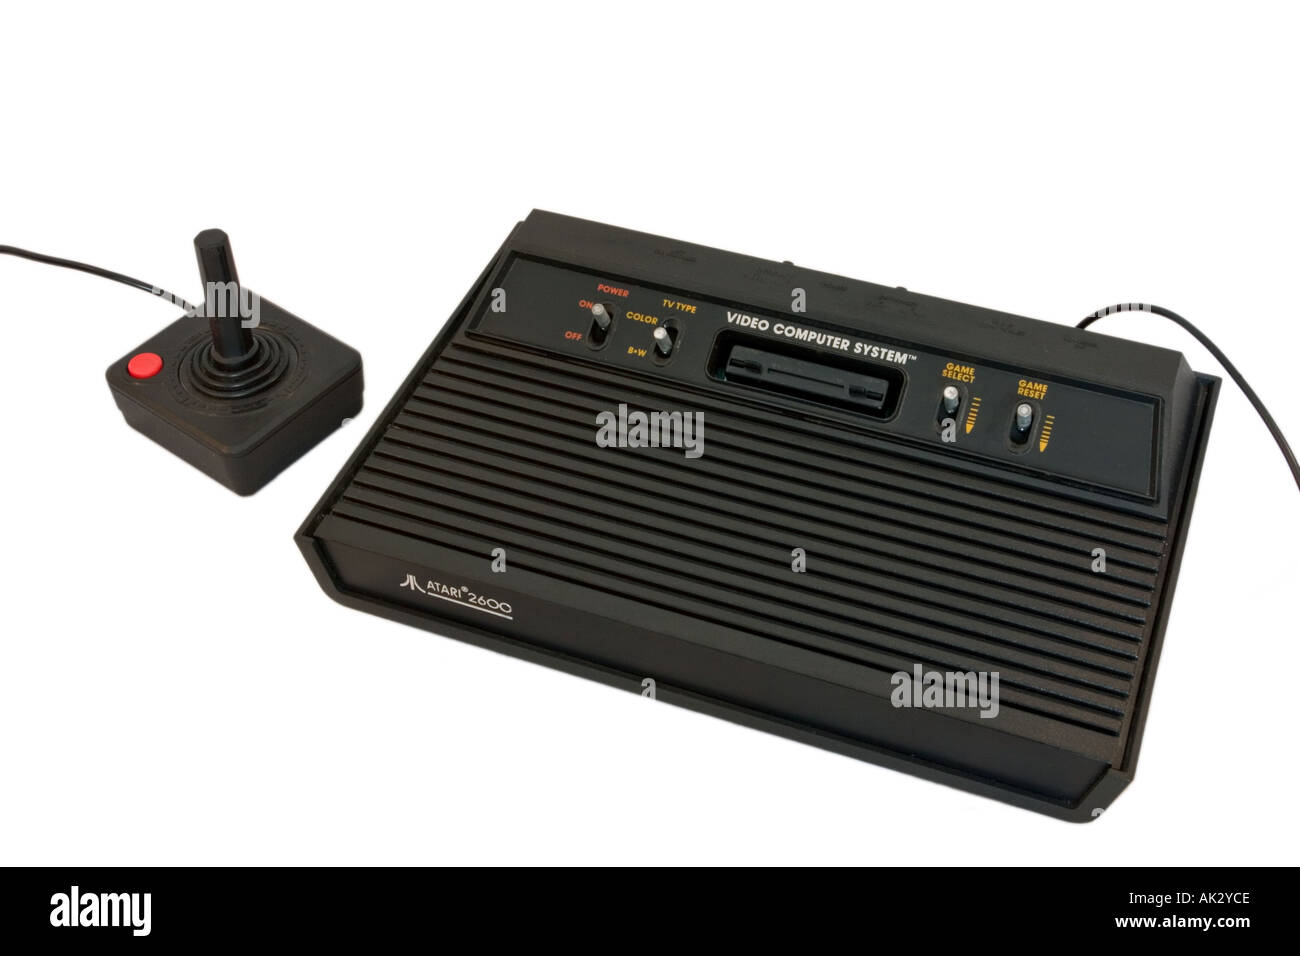 Original model Atari VCS 2600 Video Computer System games console plus original black joystick with bright red button Stock Photo